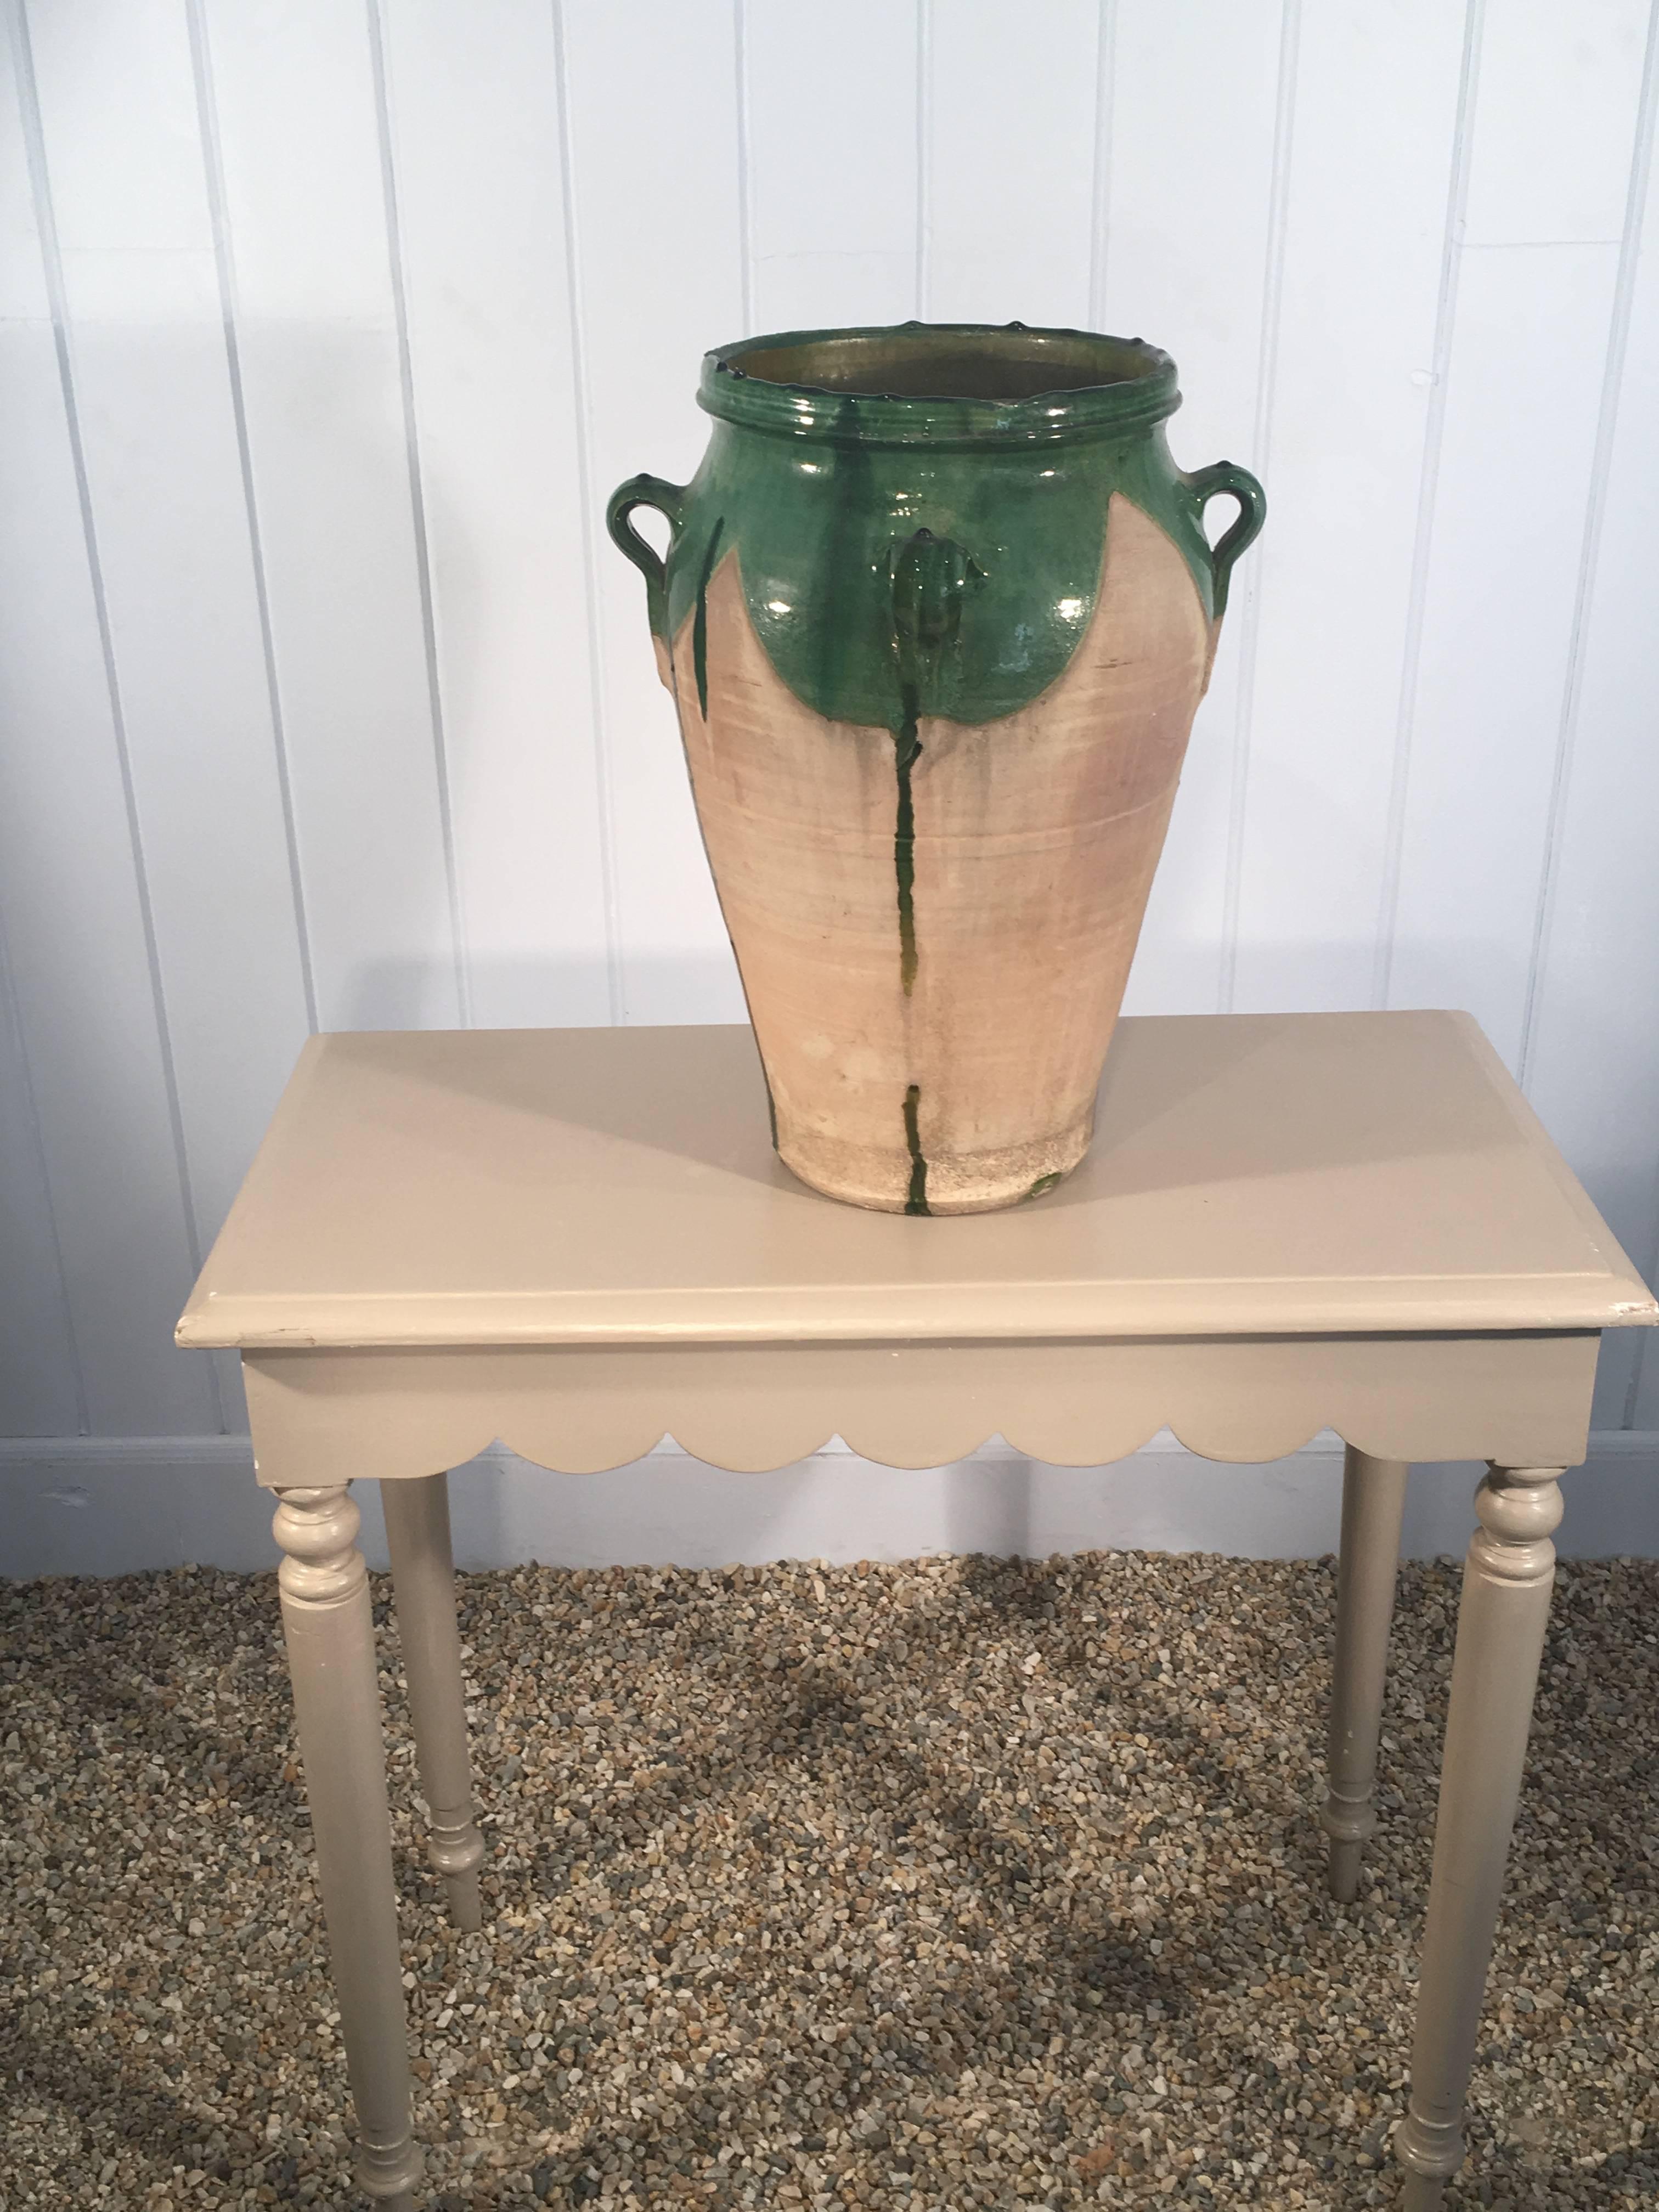 20th Century French Green-Glazed Terracotta Amphora or Pot